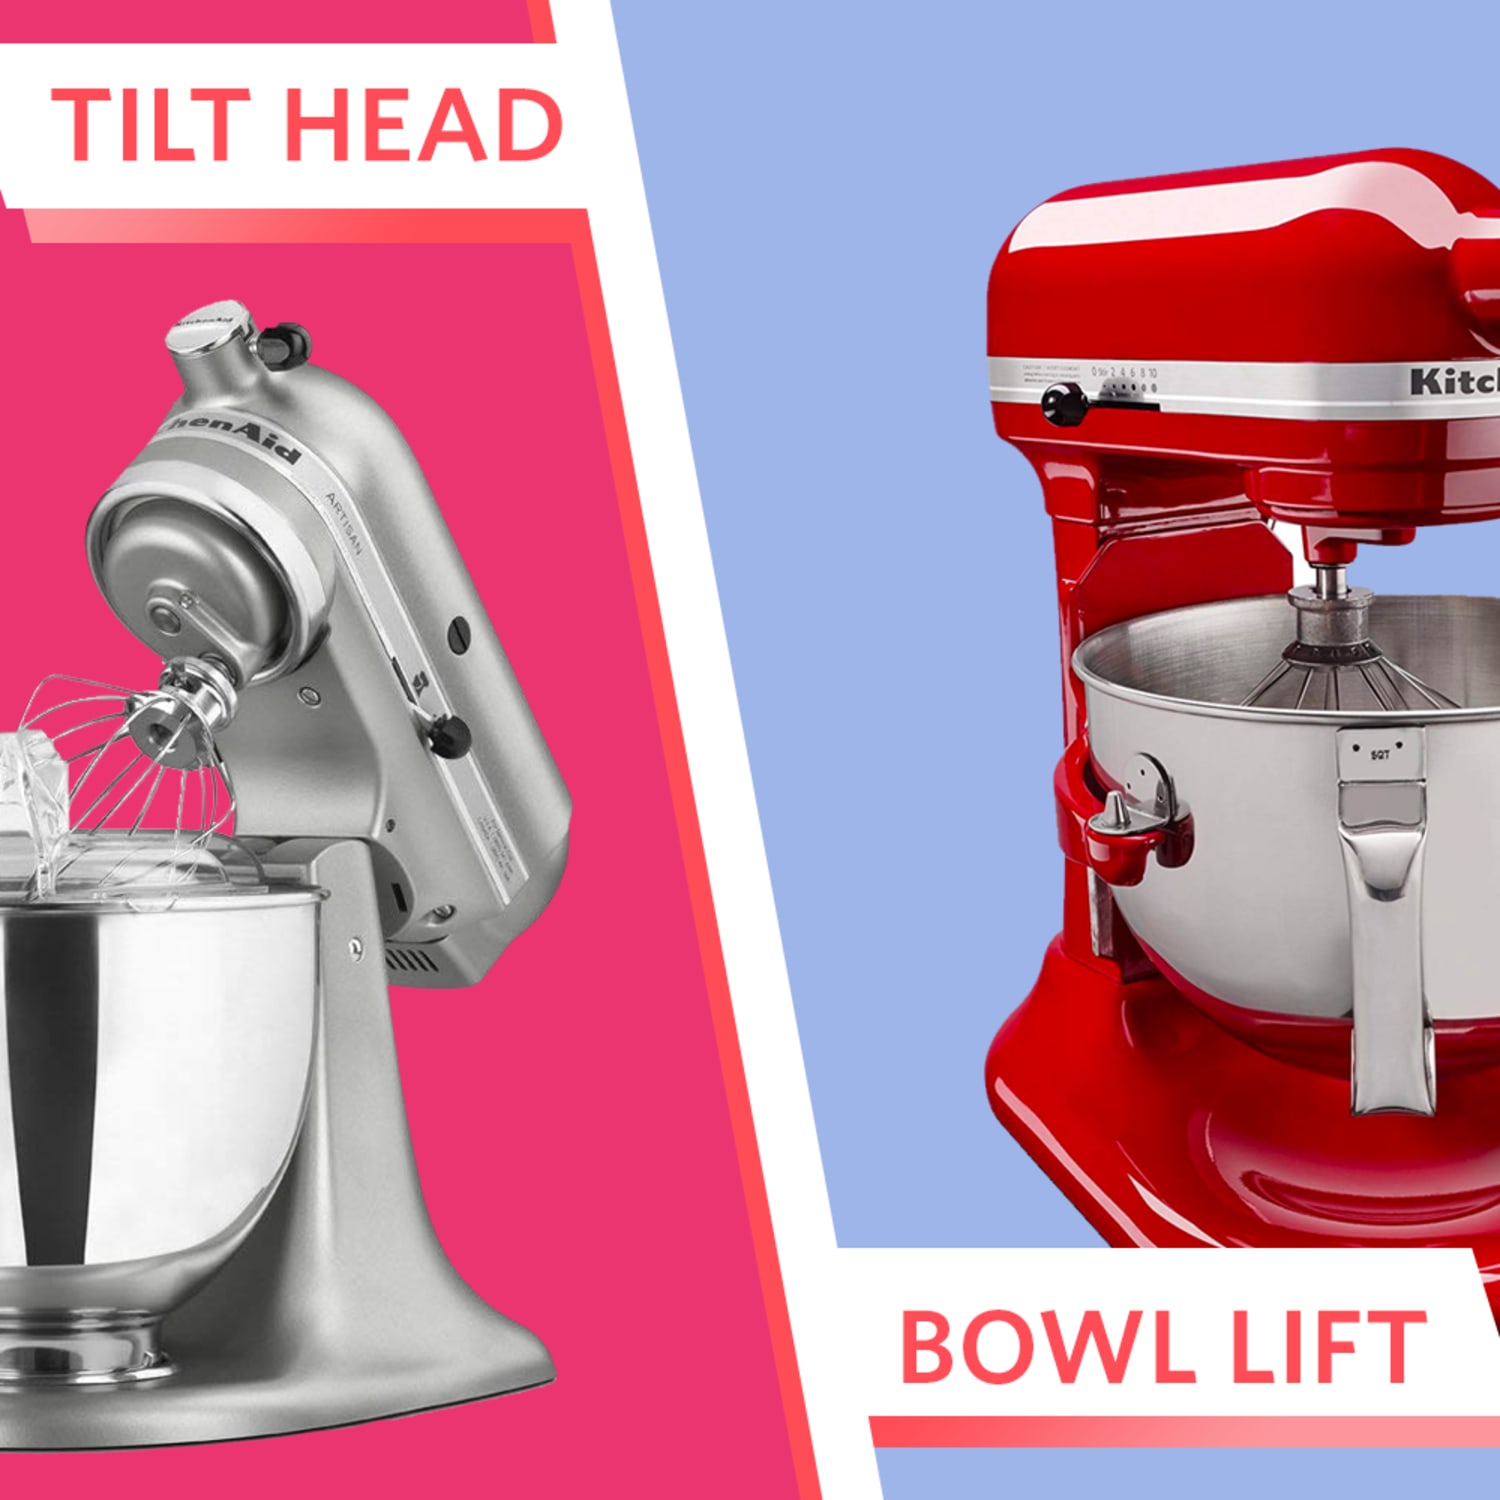 KitchenAid Mixer Sizes: Which One Do You Need?